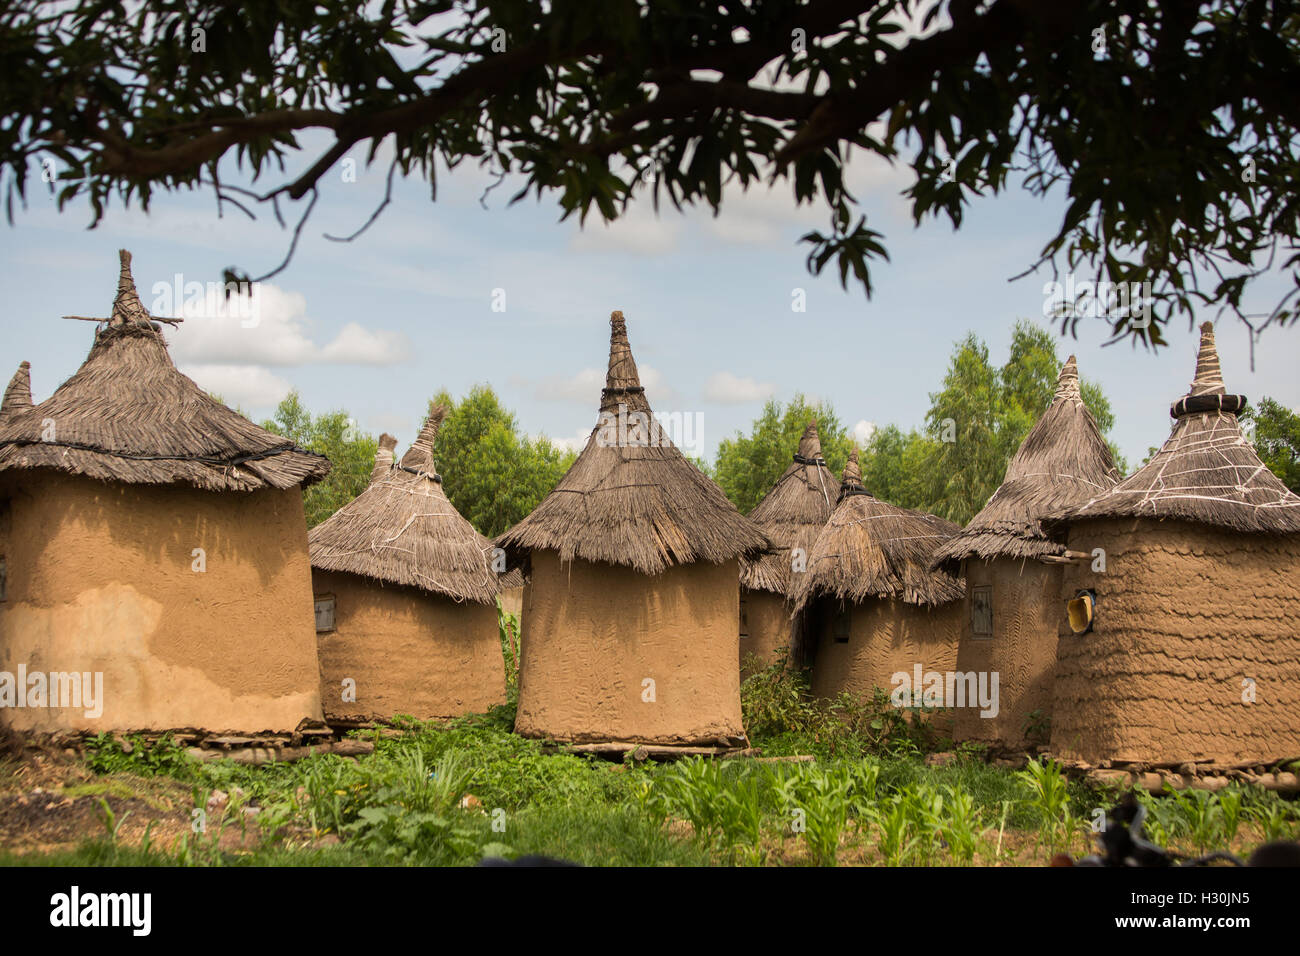 Casas africanas fotografías e imágenes de alta resolución - Alamy